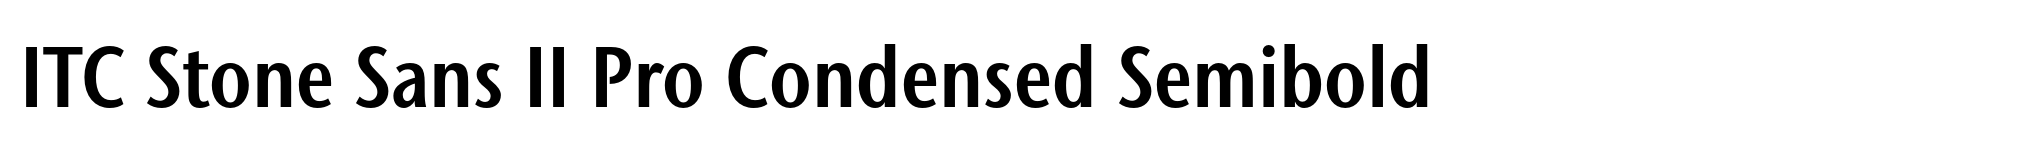 ITC Stone Sans II Pro Condensed Semibold image